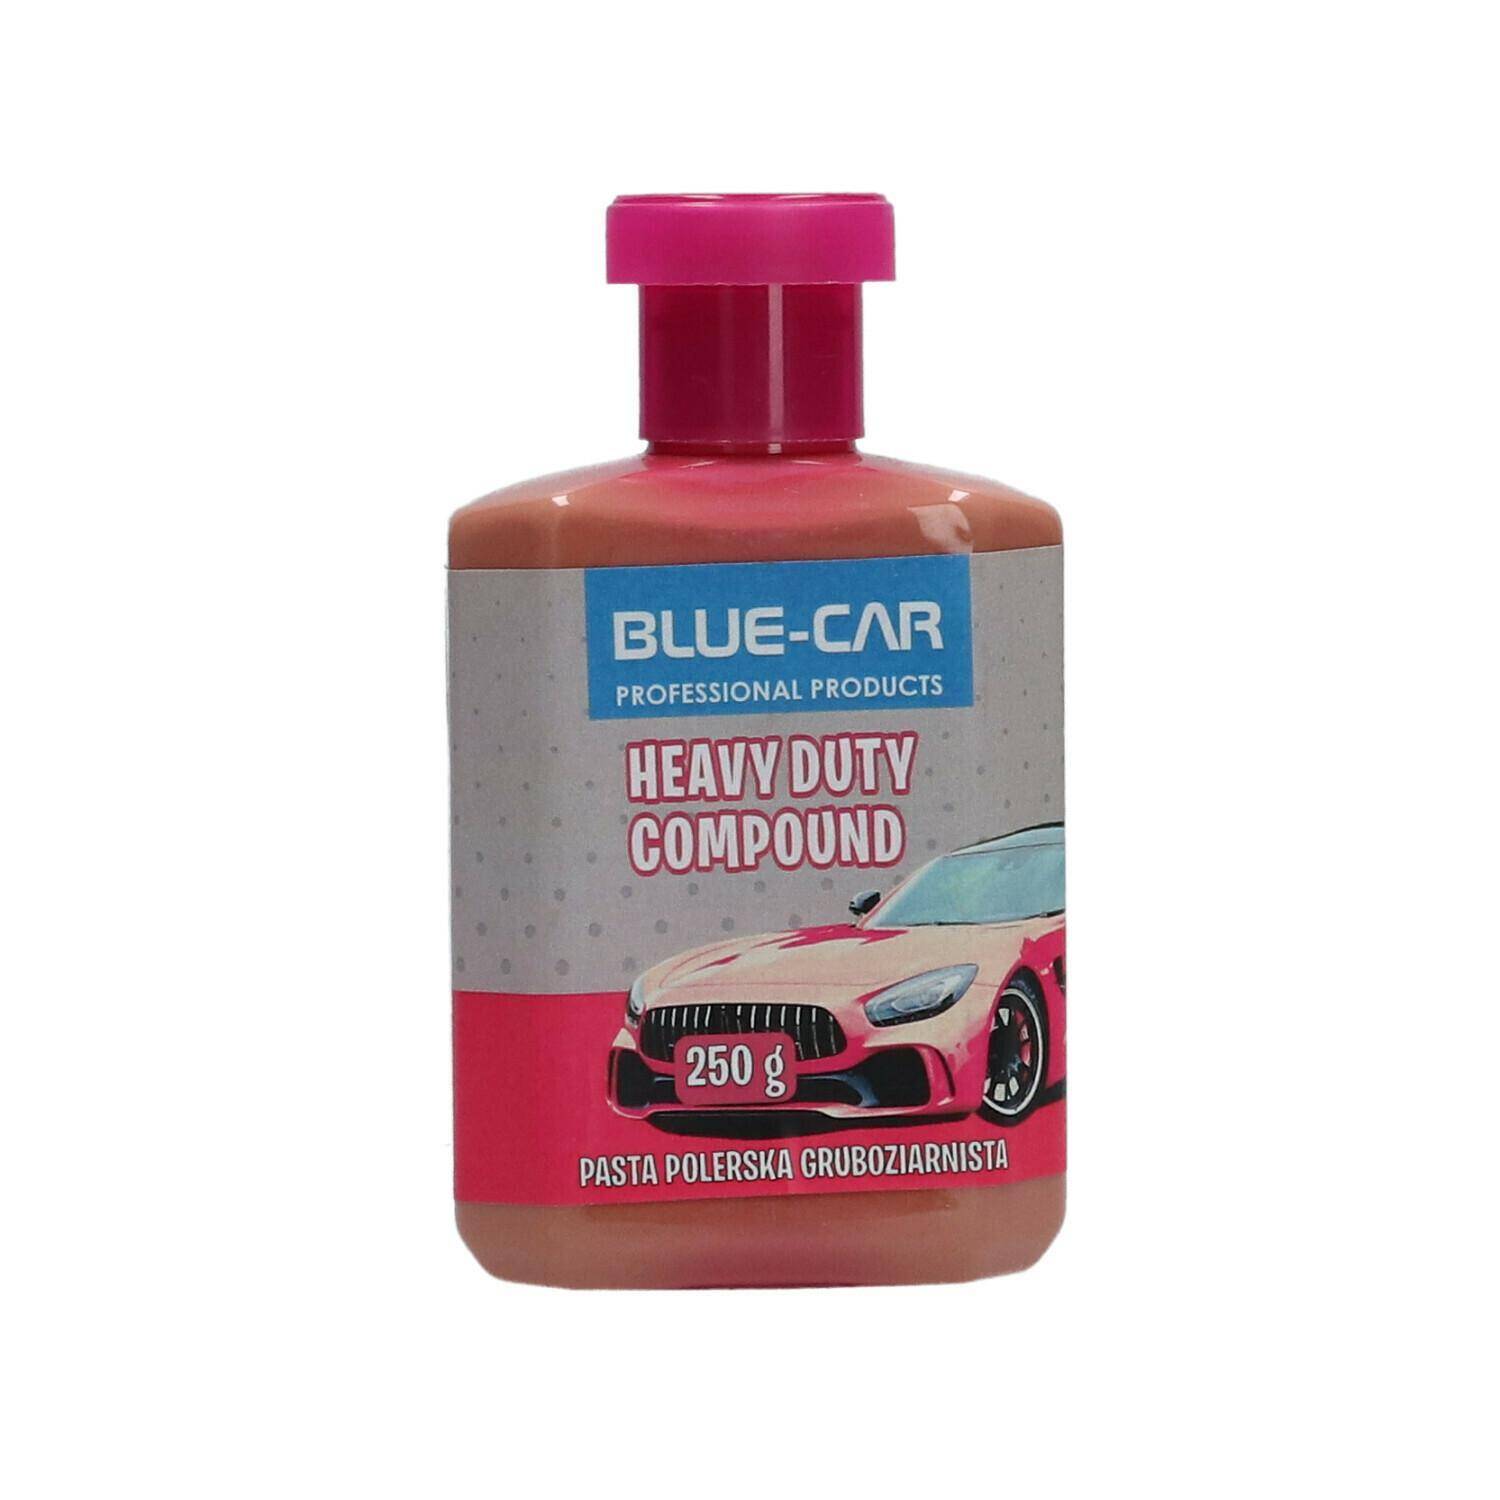 BLUE-CAR HEAVY DUTY COMPOUND